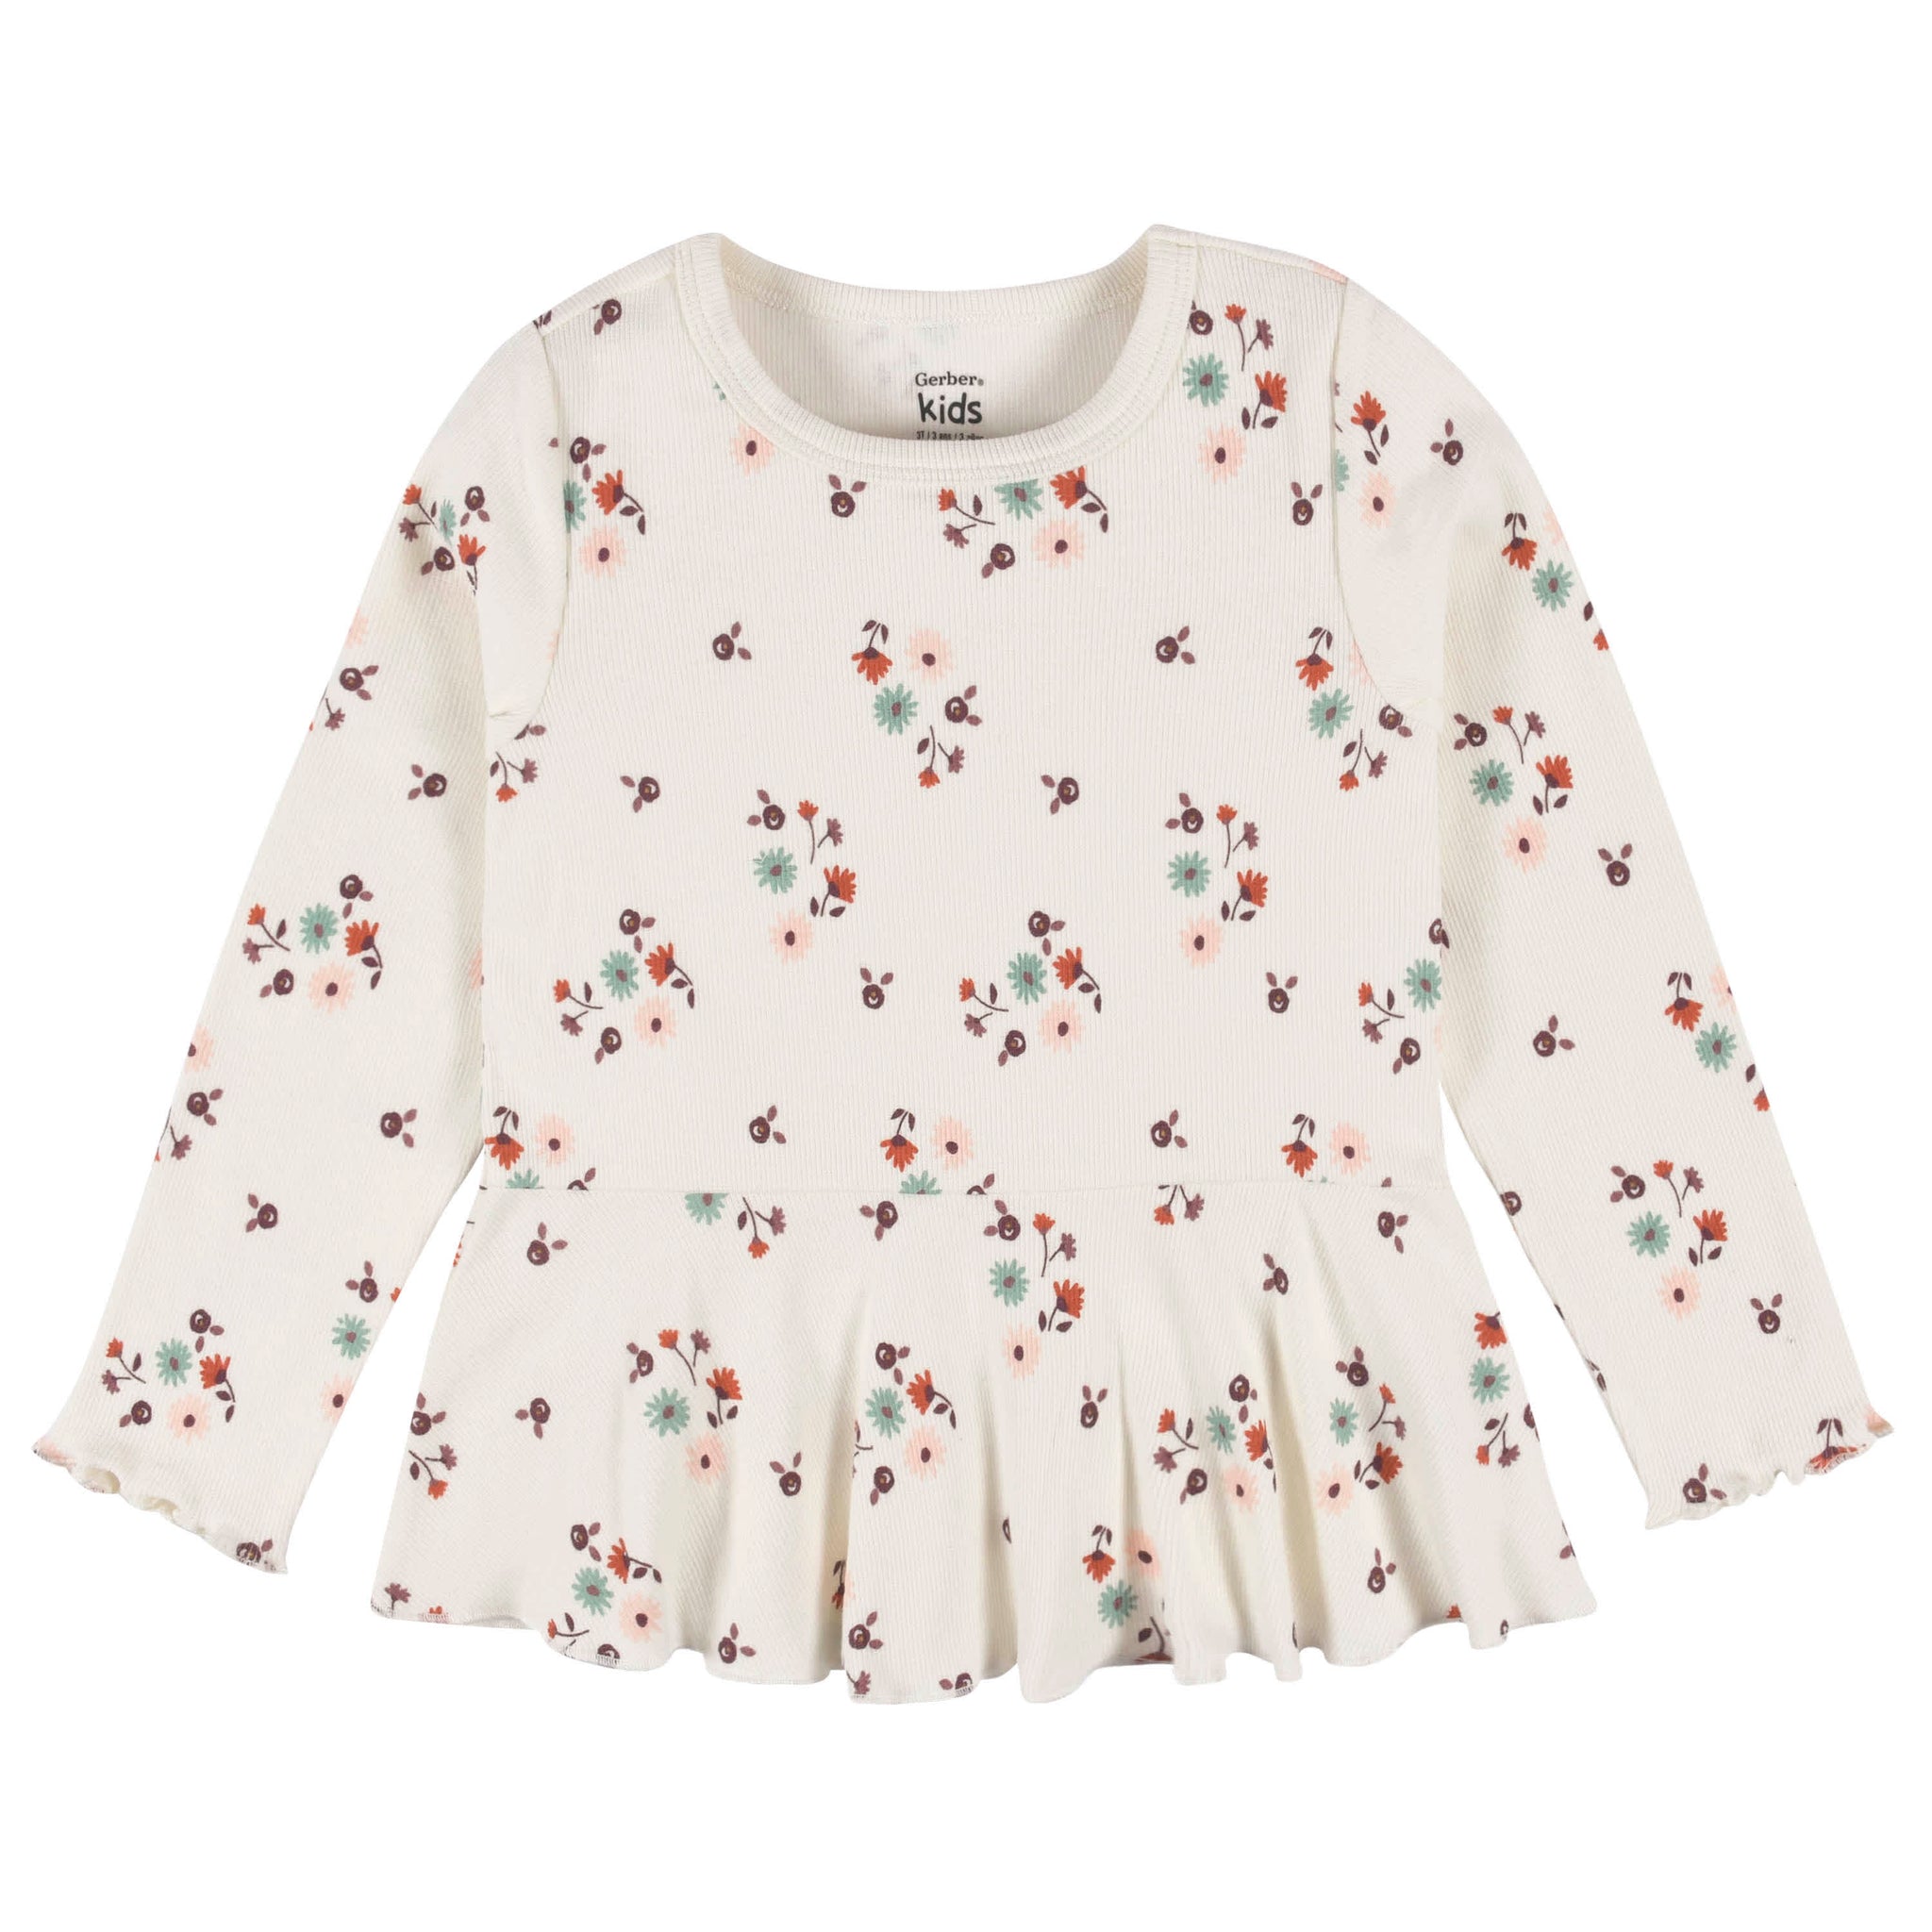 2-Pack Infant & Toddler Girls Mint Floral Peplum Tops-Gerber Childrenswear Wholesale